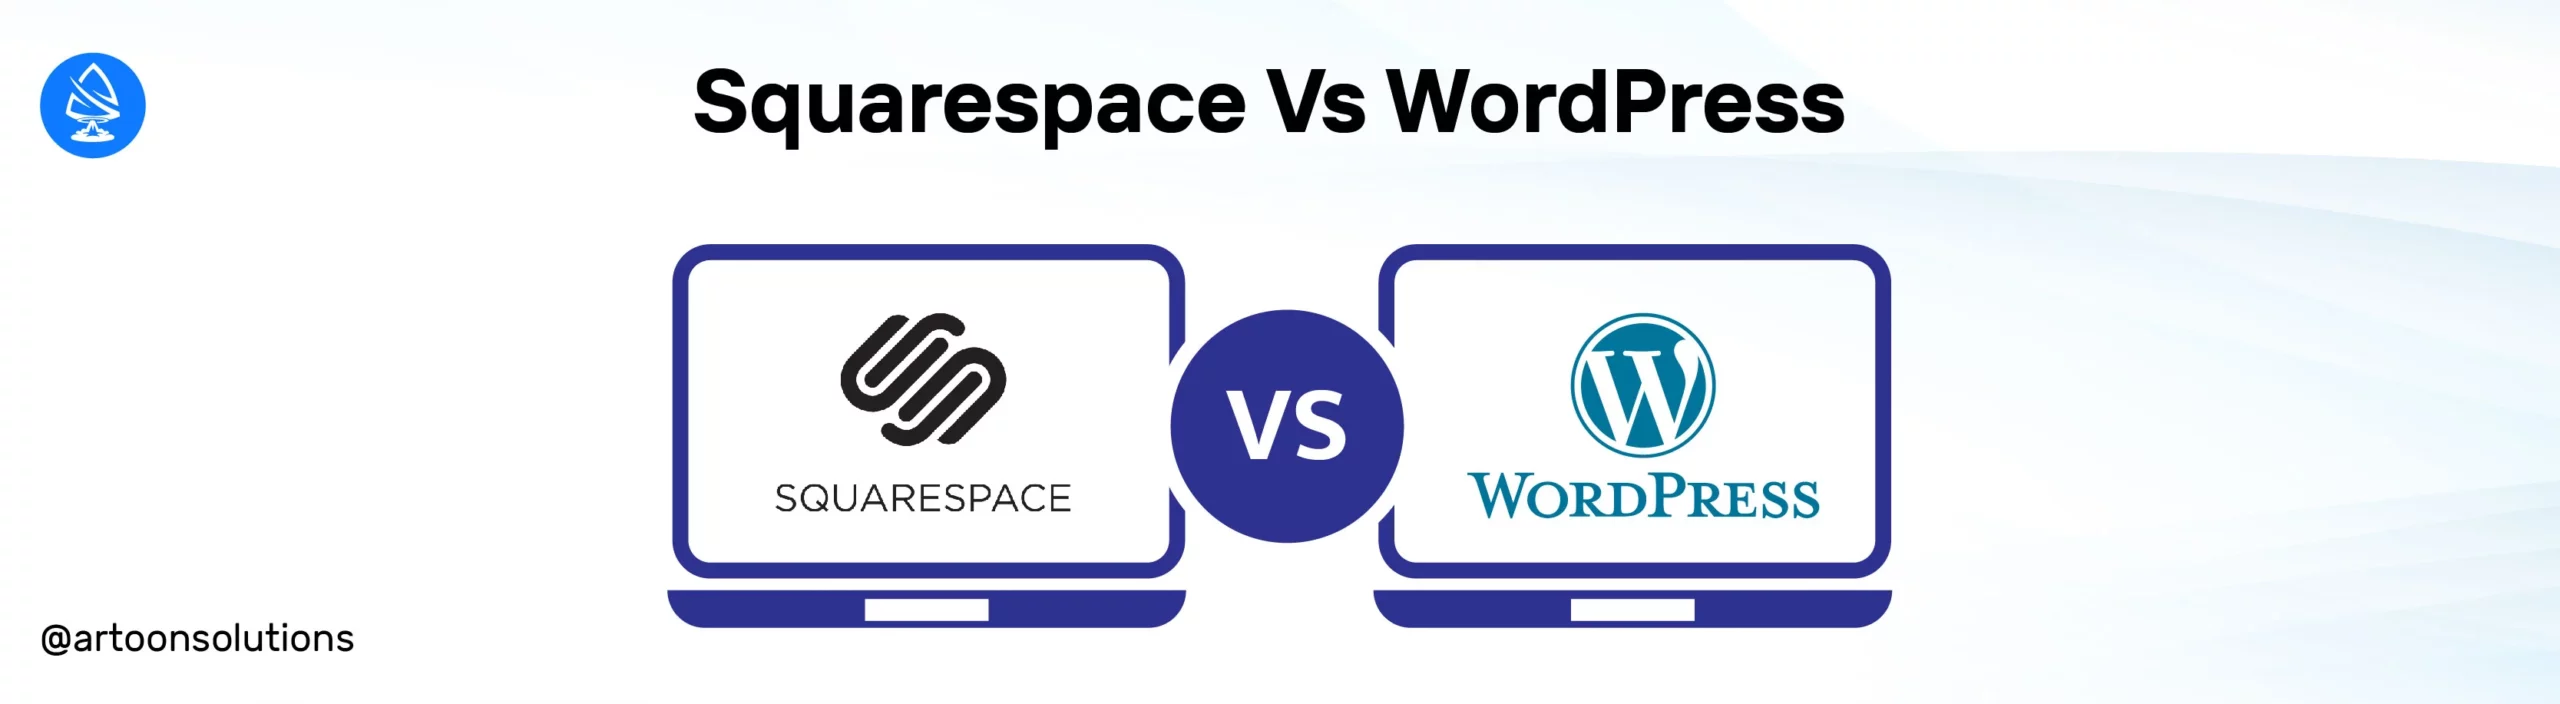 Squarespace vs WordPress: Website Builder 